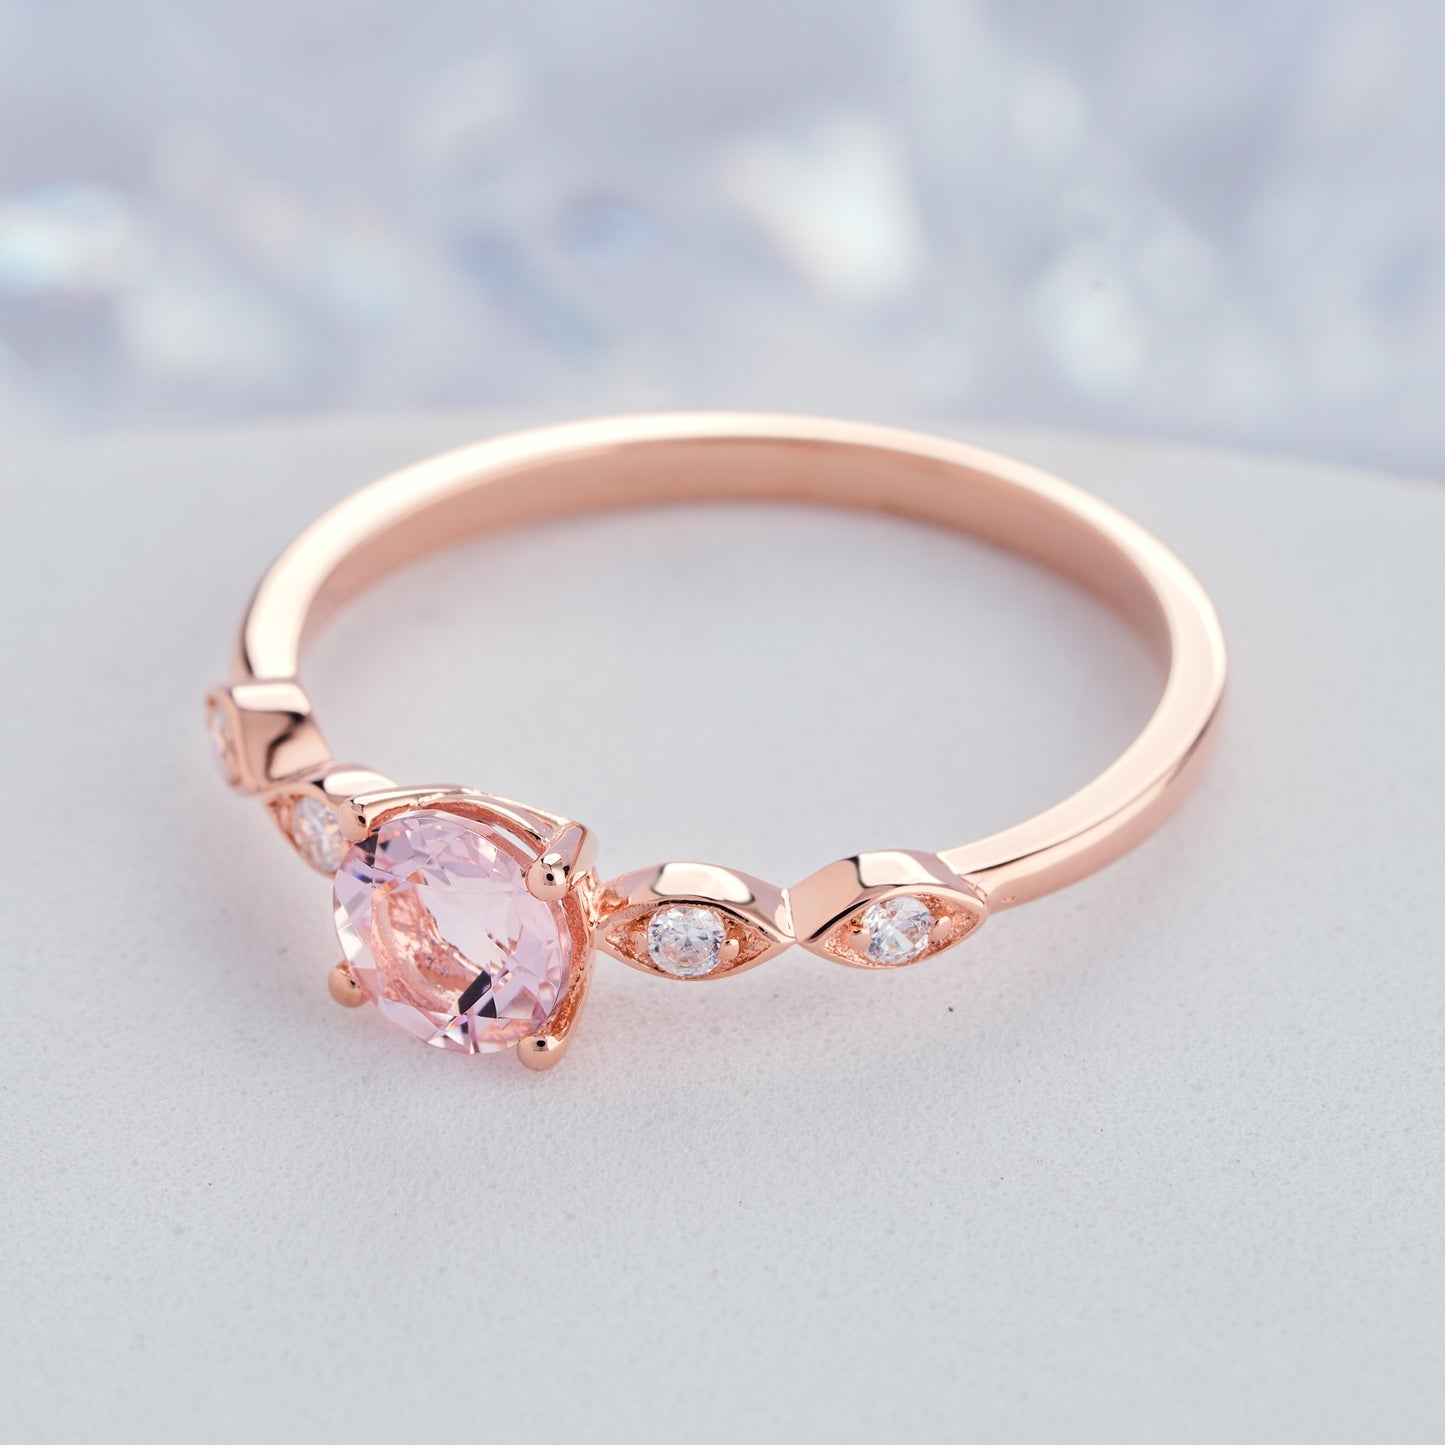 0.5carat Natural Pink Morganite Solid14K/18K Gold Diamond Ring - ShainJewelry